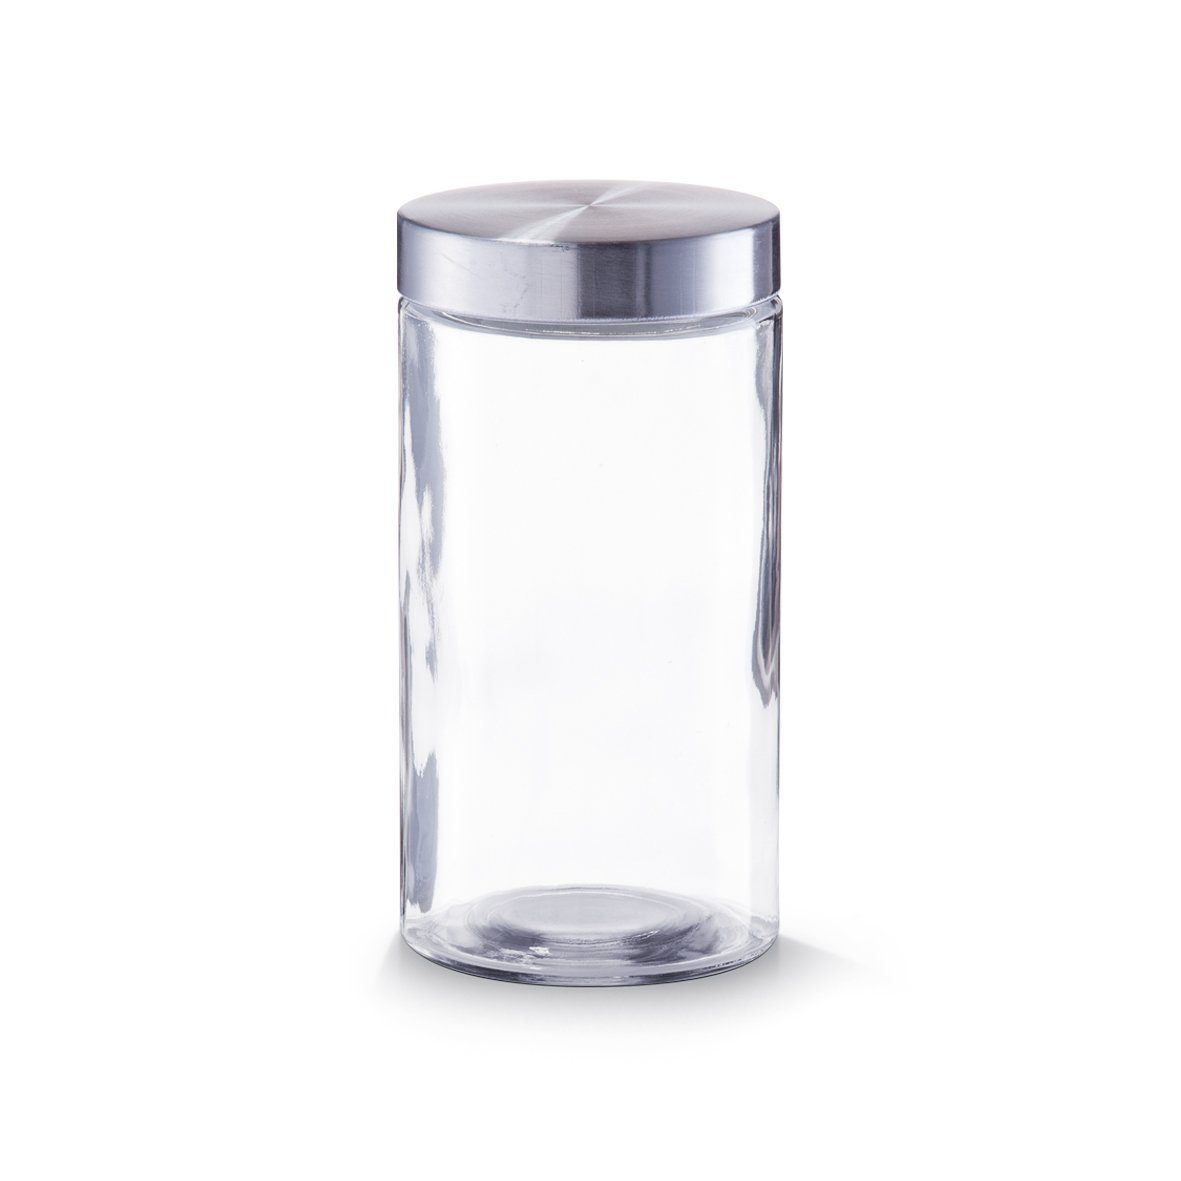 Zeller Present Vorratsglas Vorratsglas m. Edelstahldeckel, Glas/Edelstahl, 1600 ml, Glas/Edelstahl, transparent, Ø11 x 21,5 cm